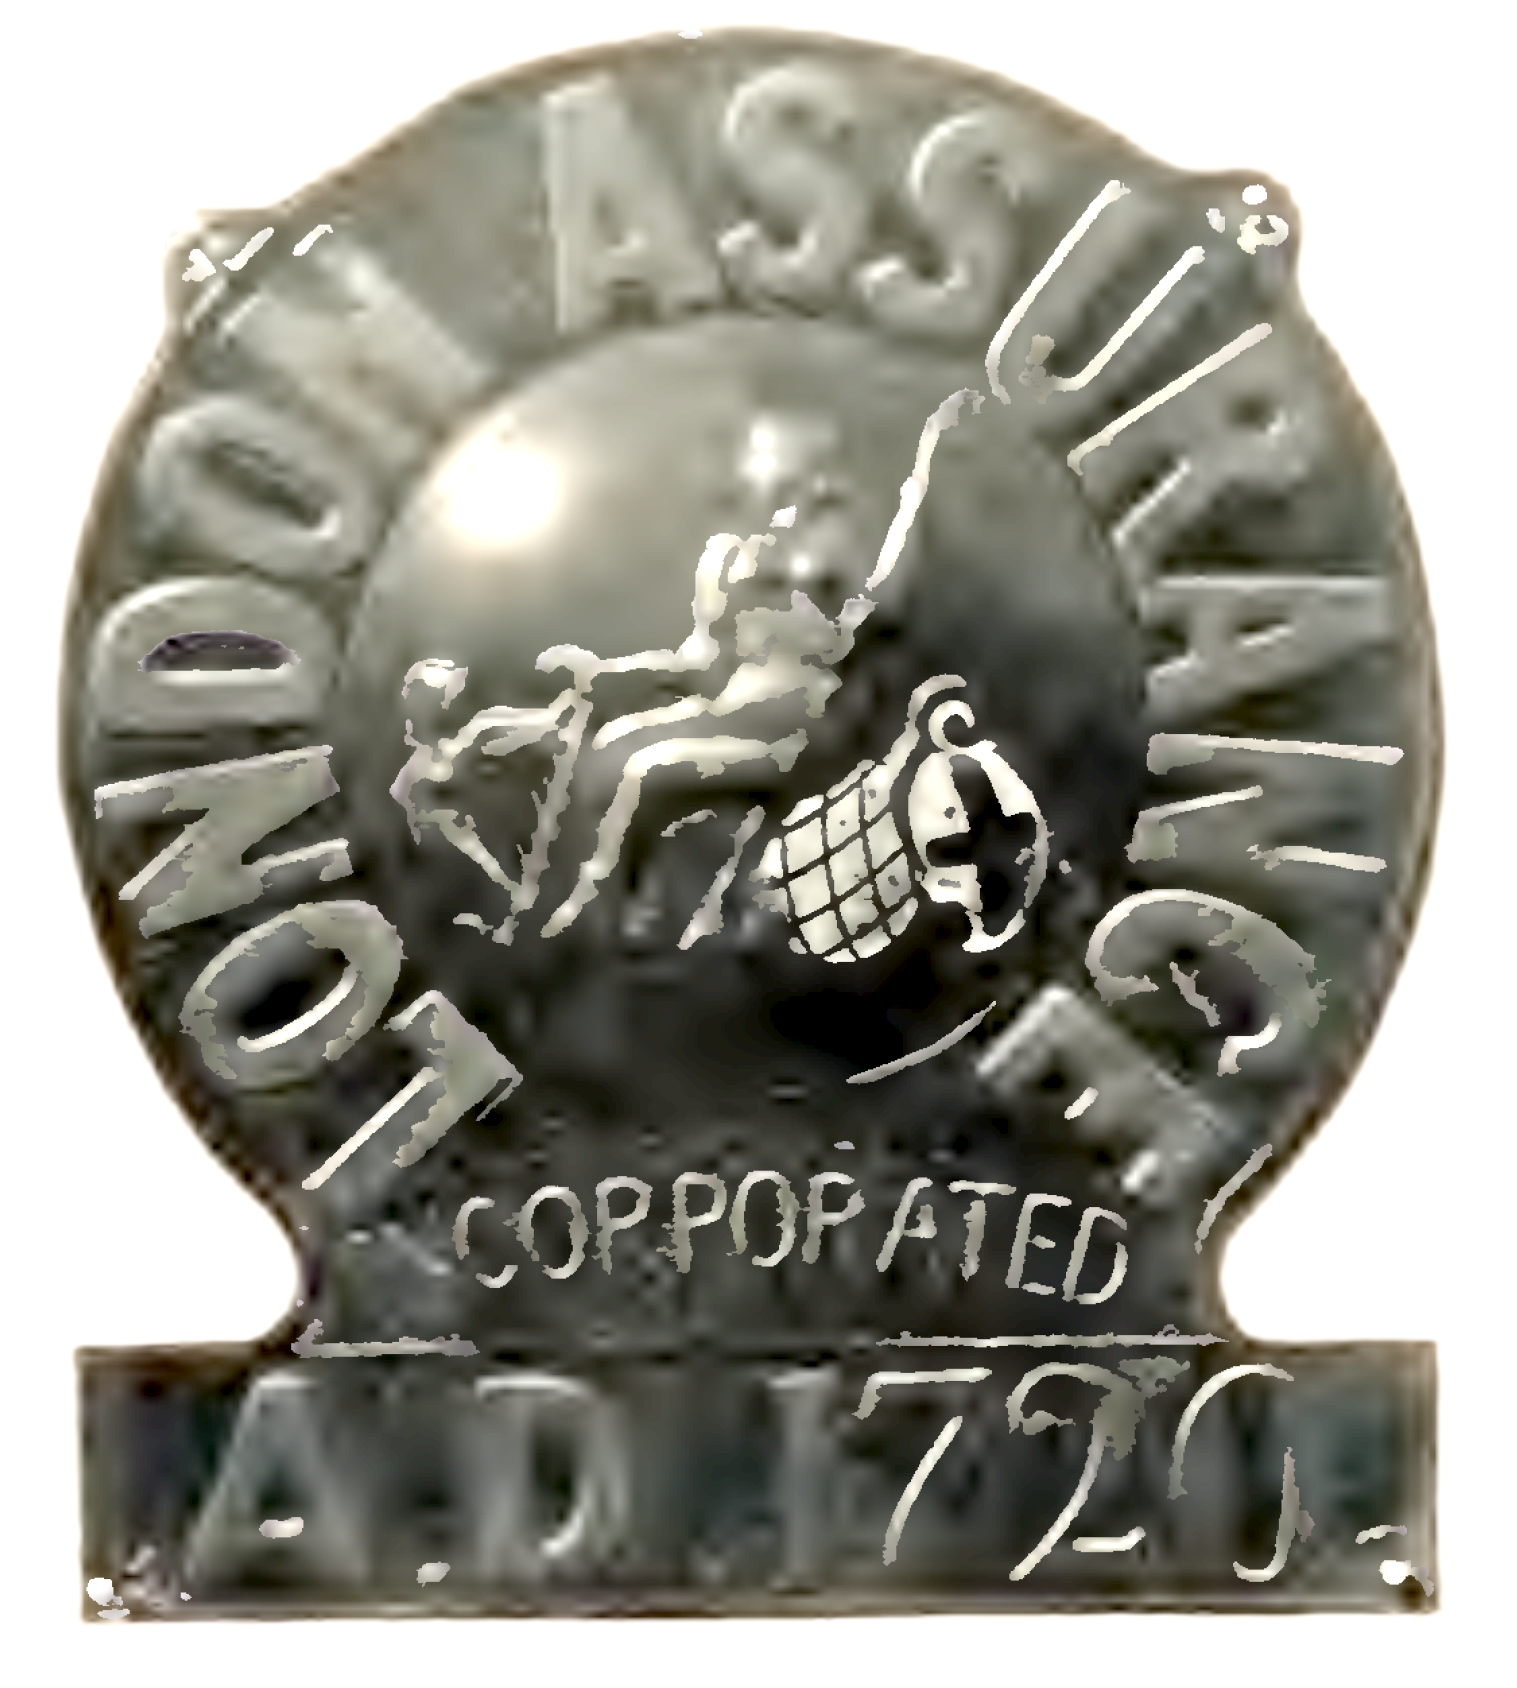 The London Assurance Company (1720) logo.